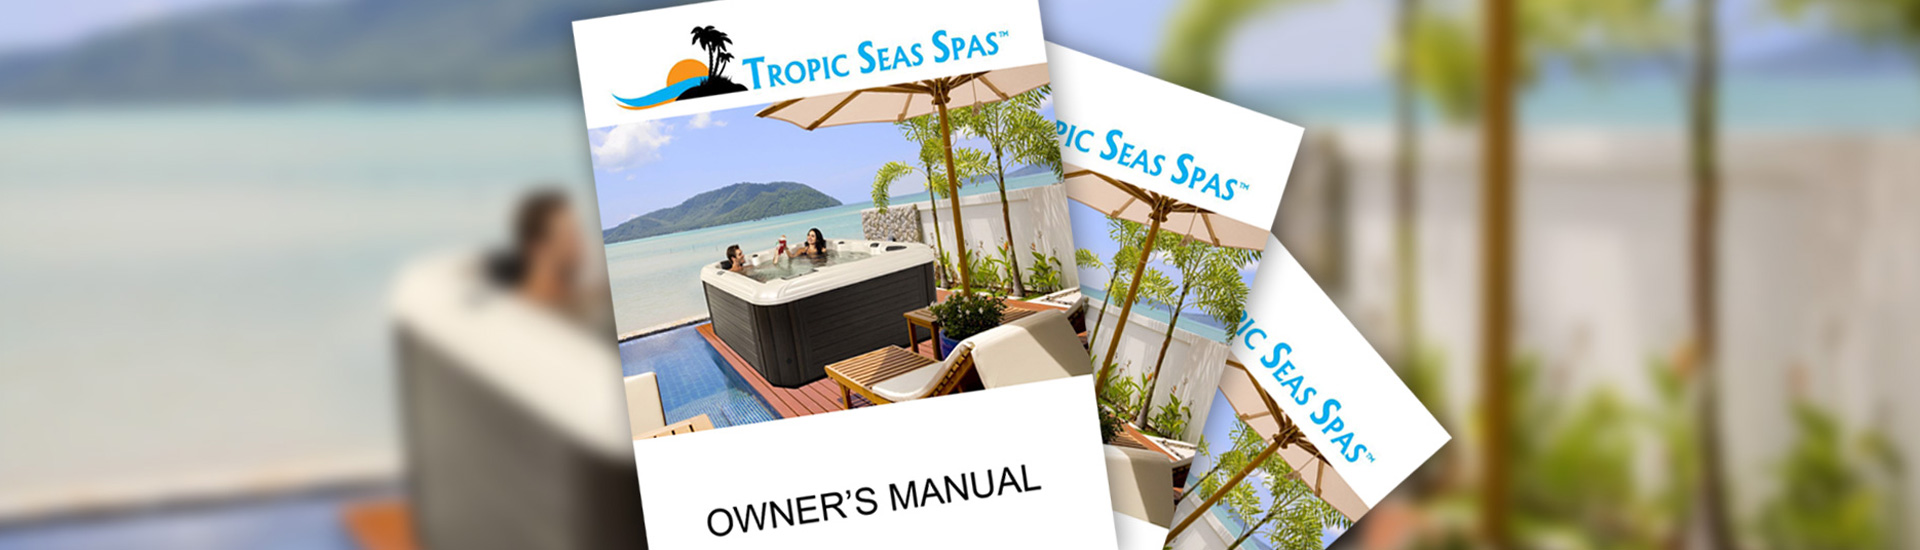 Tropic Seas Spas Owners Manuals